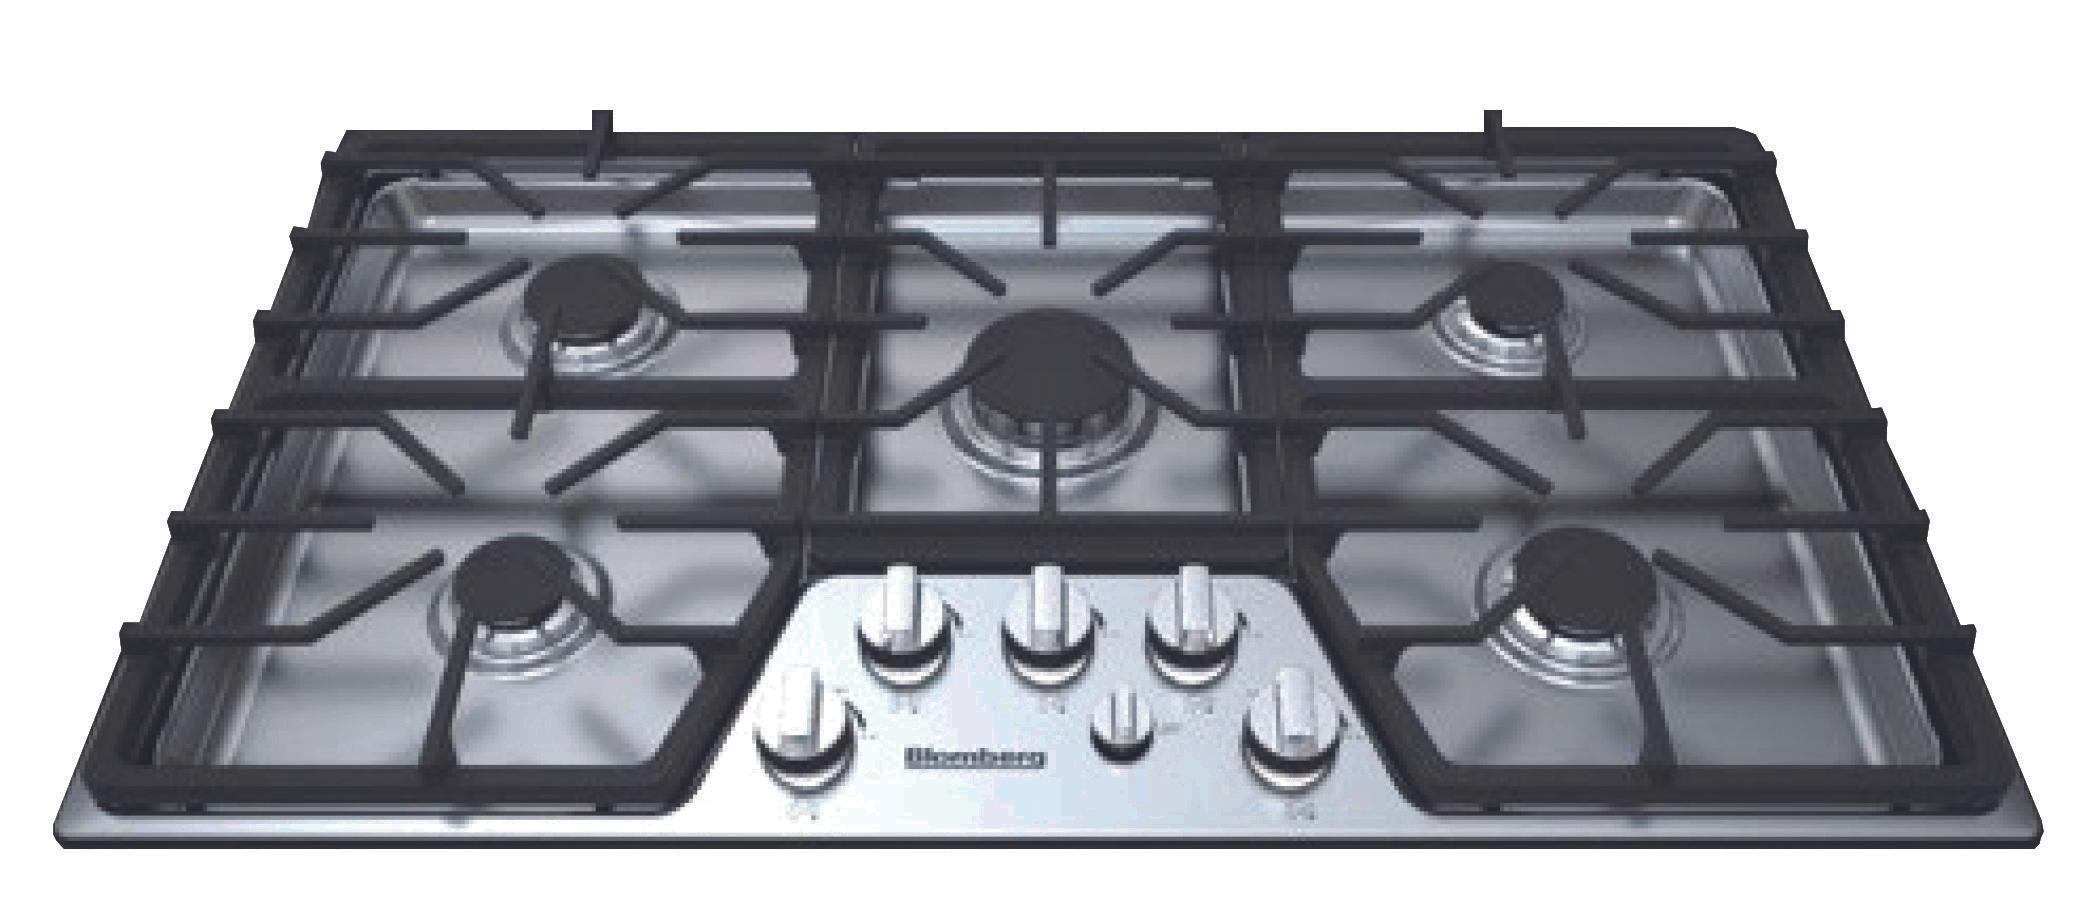 Blomberg Appliances 36in gas cooktop, 5 burner